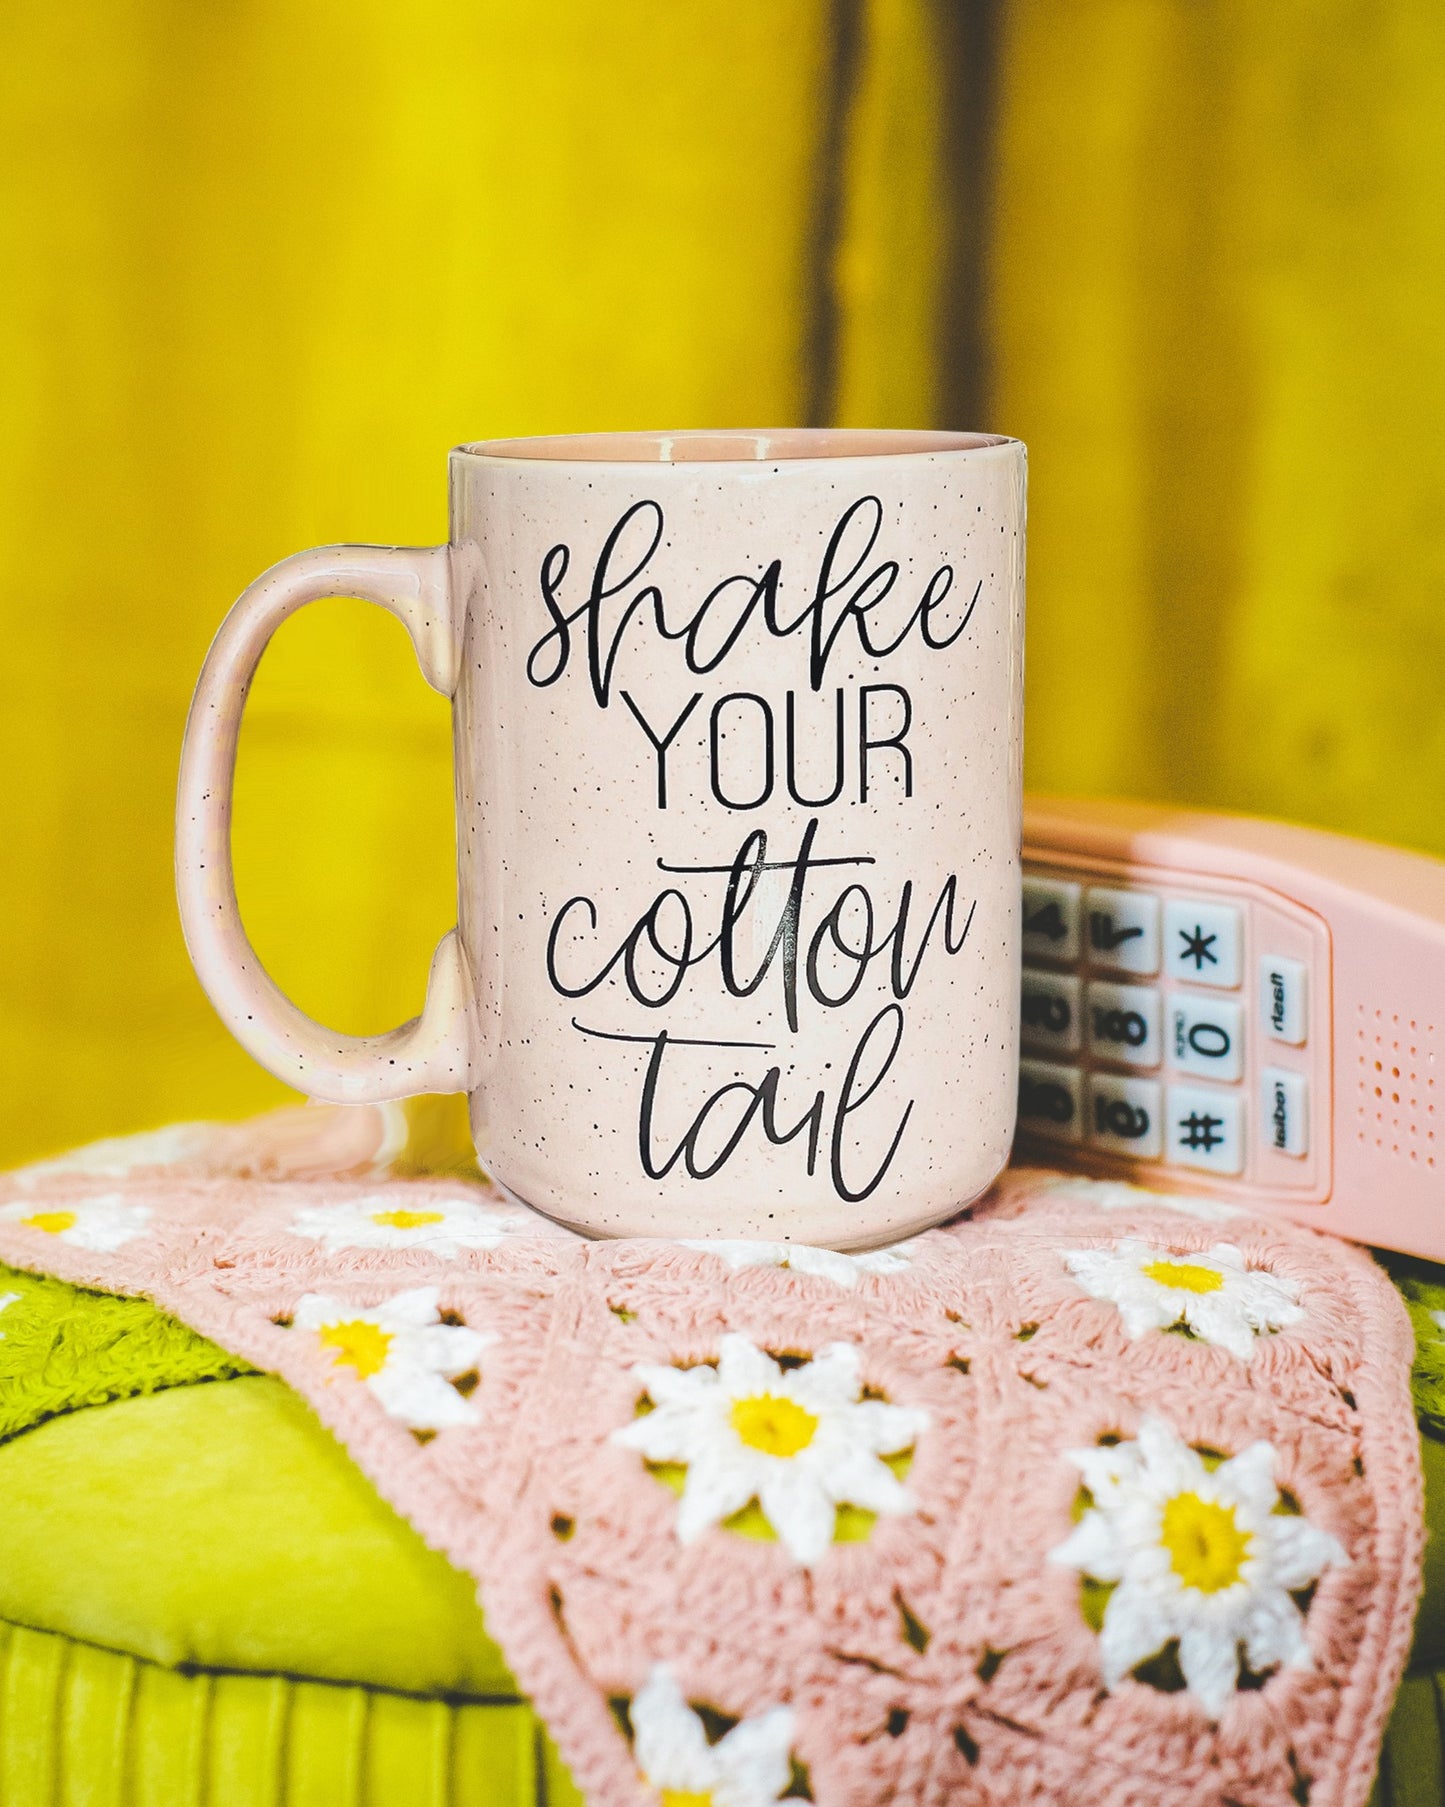 Shake Your Cotton Tail Mug